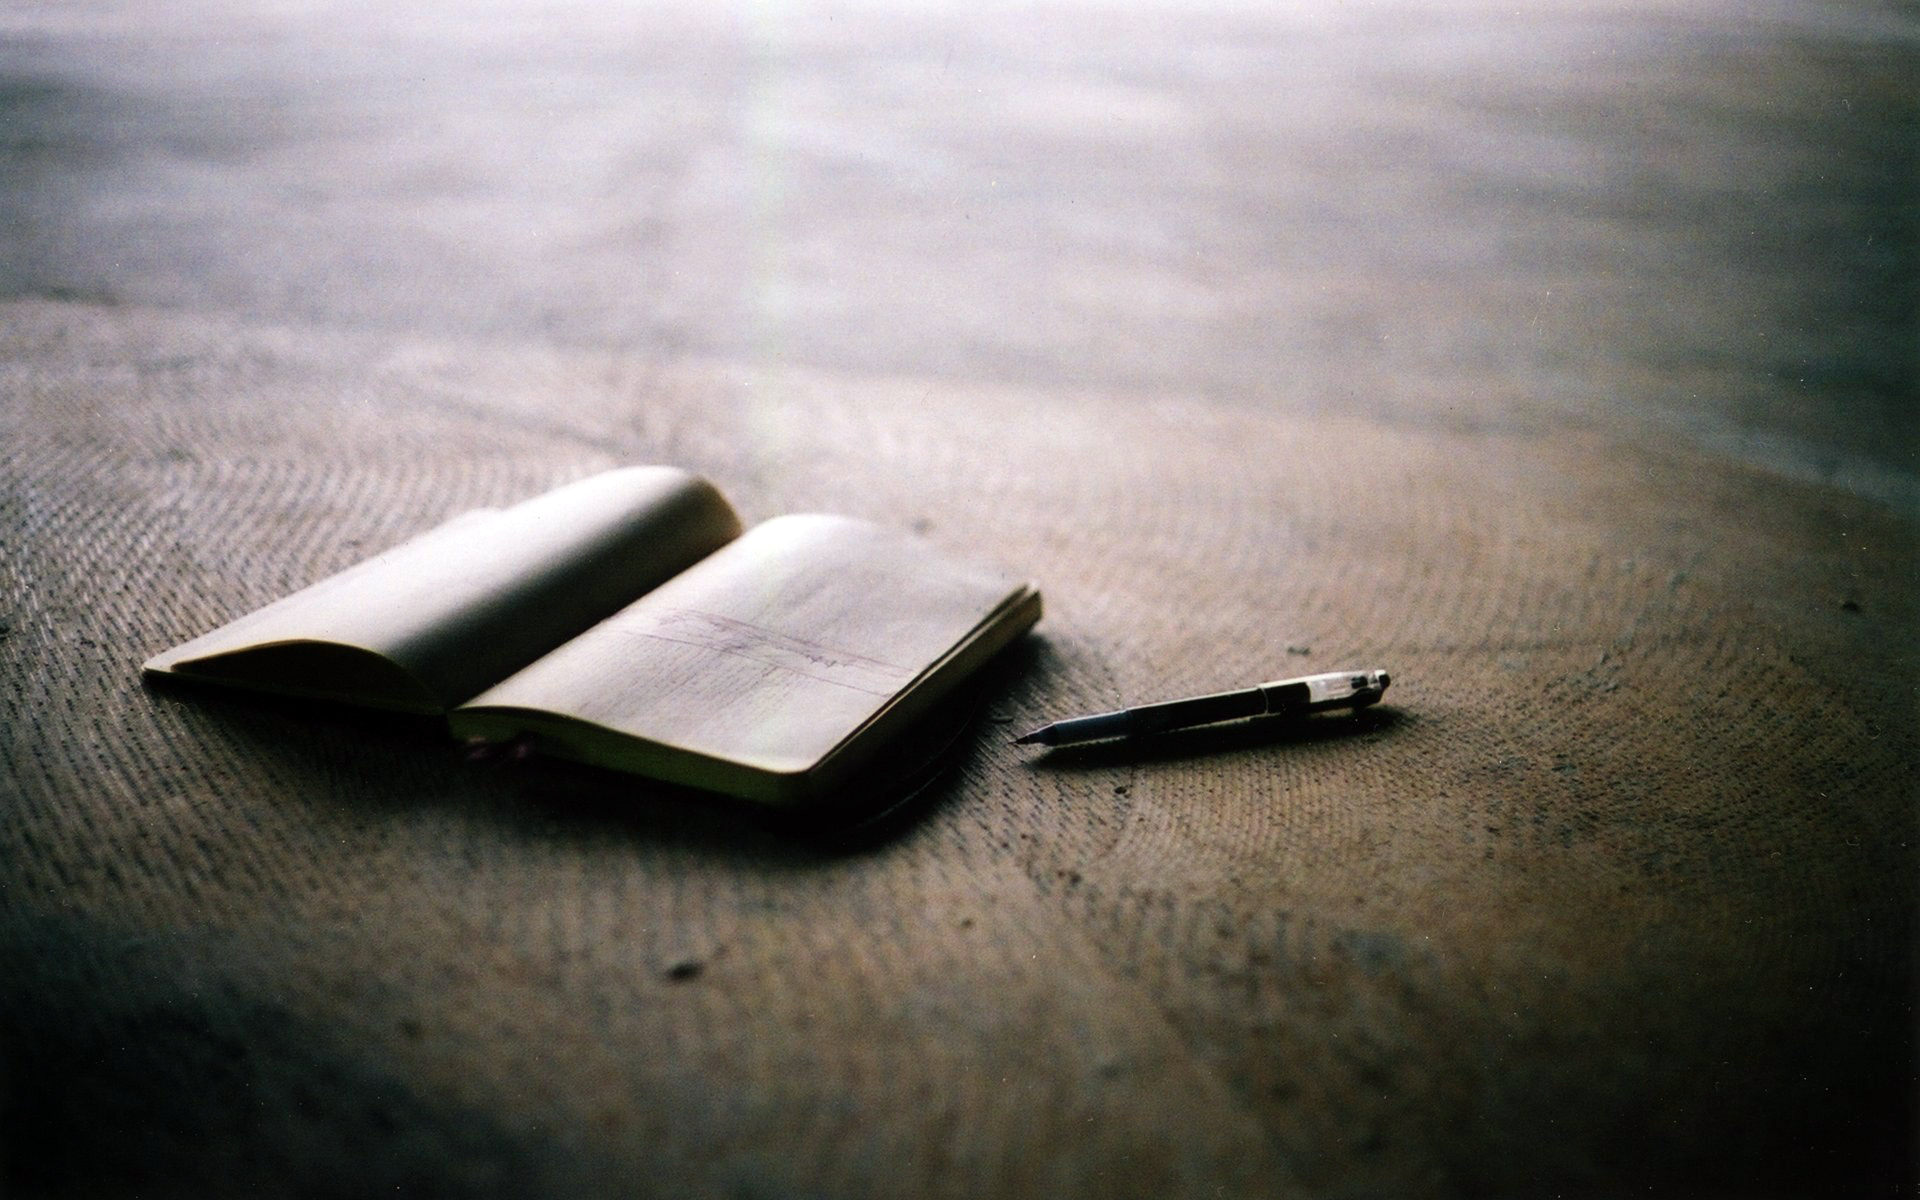 дневник и ручка картинки